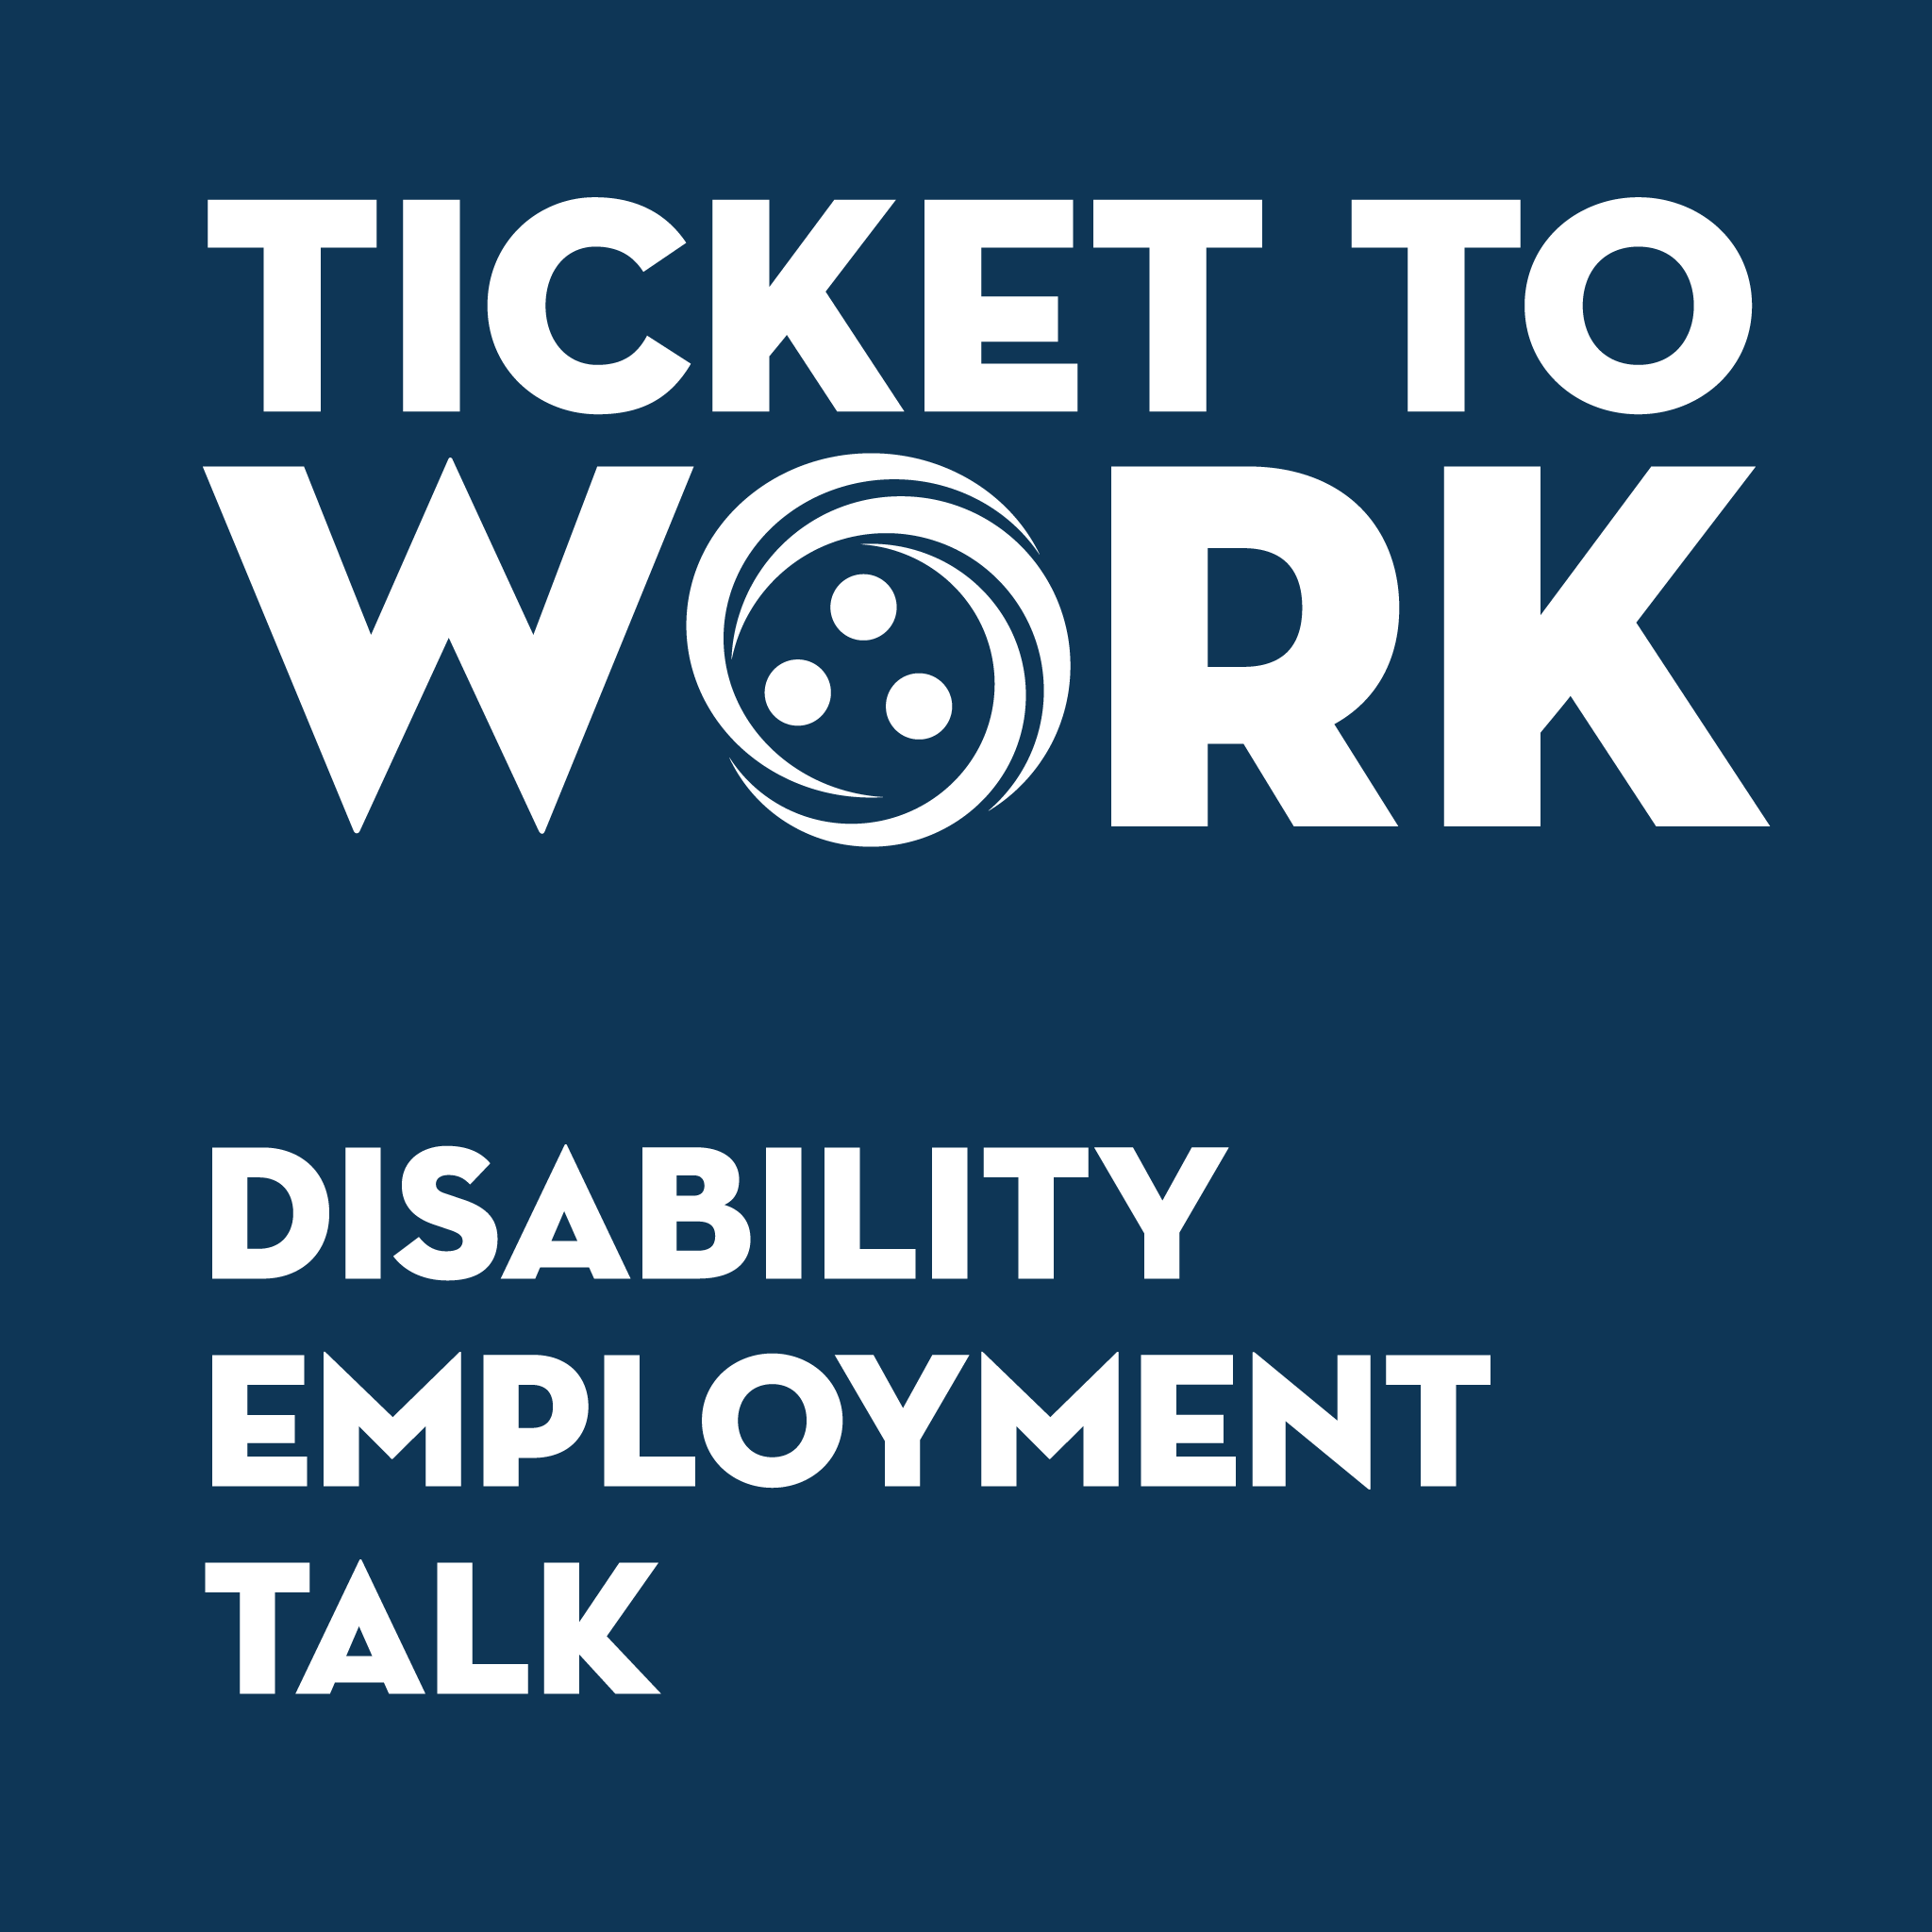 Ticket Talk #19: Schedule A Job Opportunities - Ticket to Work - Social Security